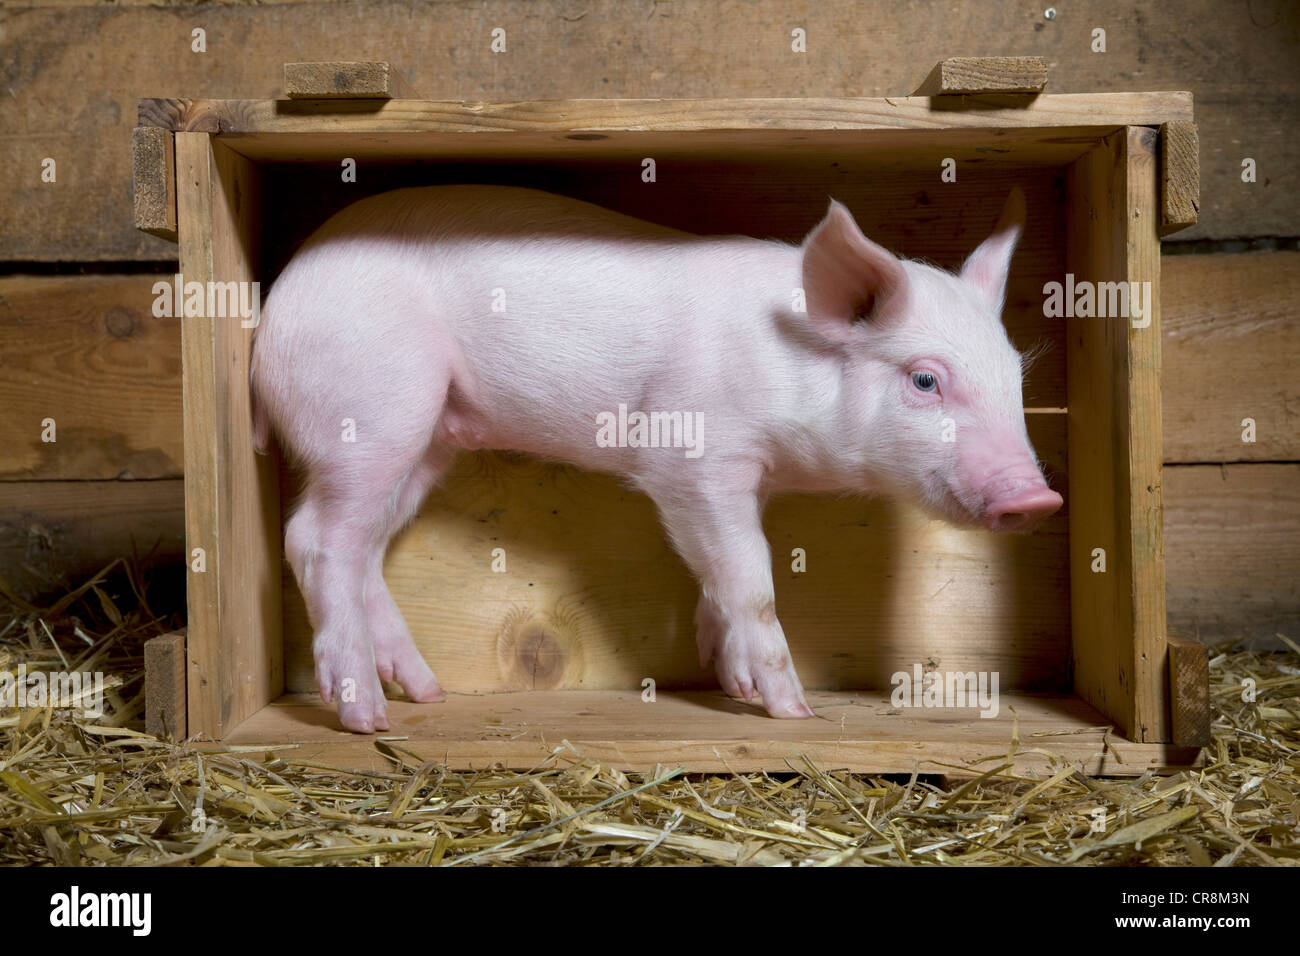 Piglet standing in wooden crate Stock Photo